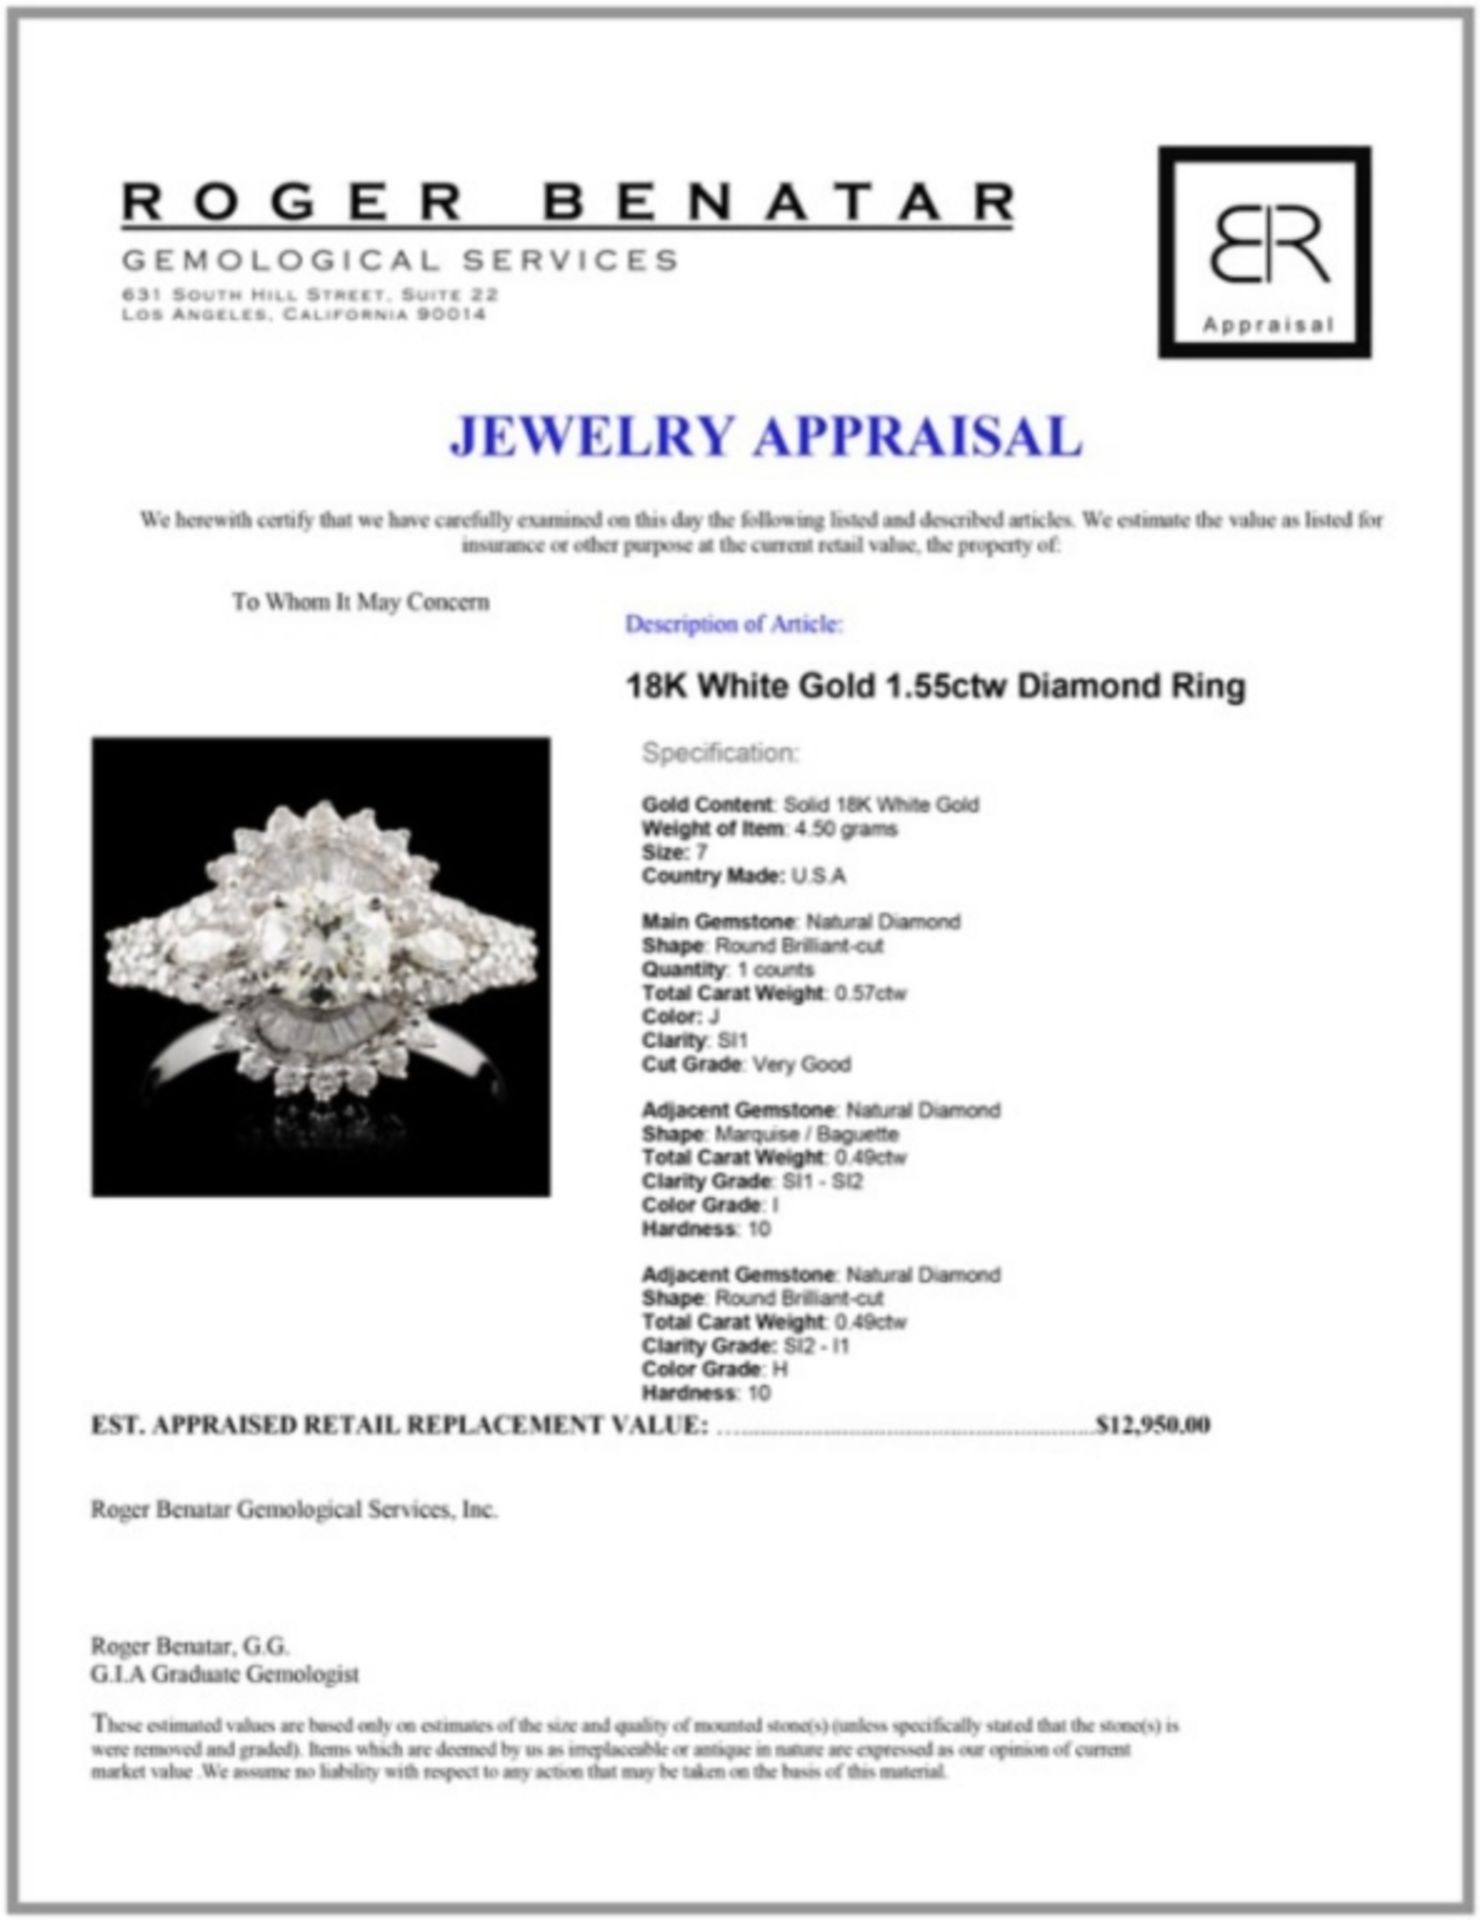 18K Gold 1.55ctw Diamond Ring - Image 4 of 4